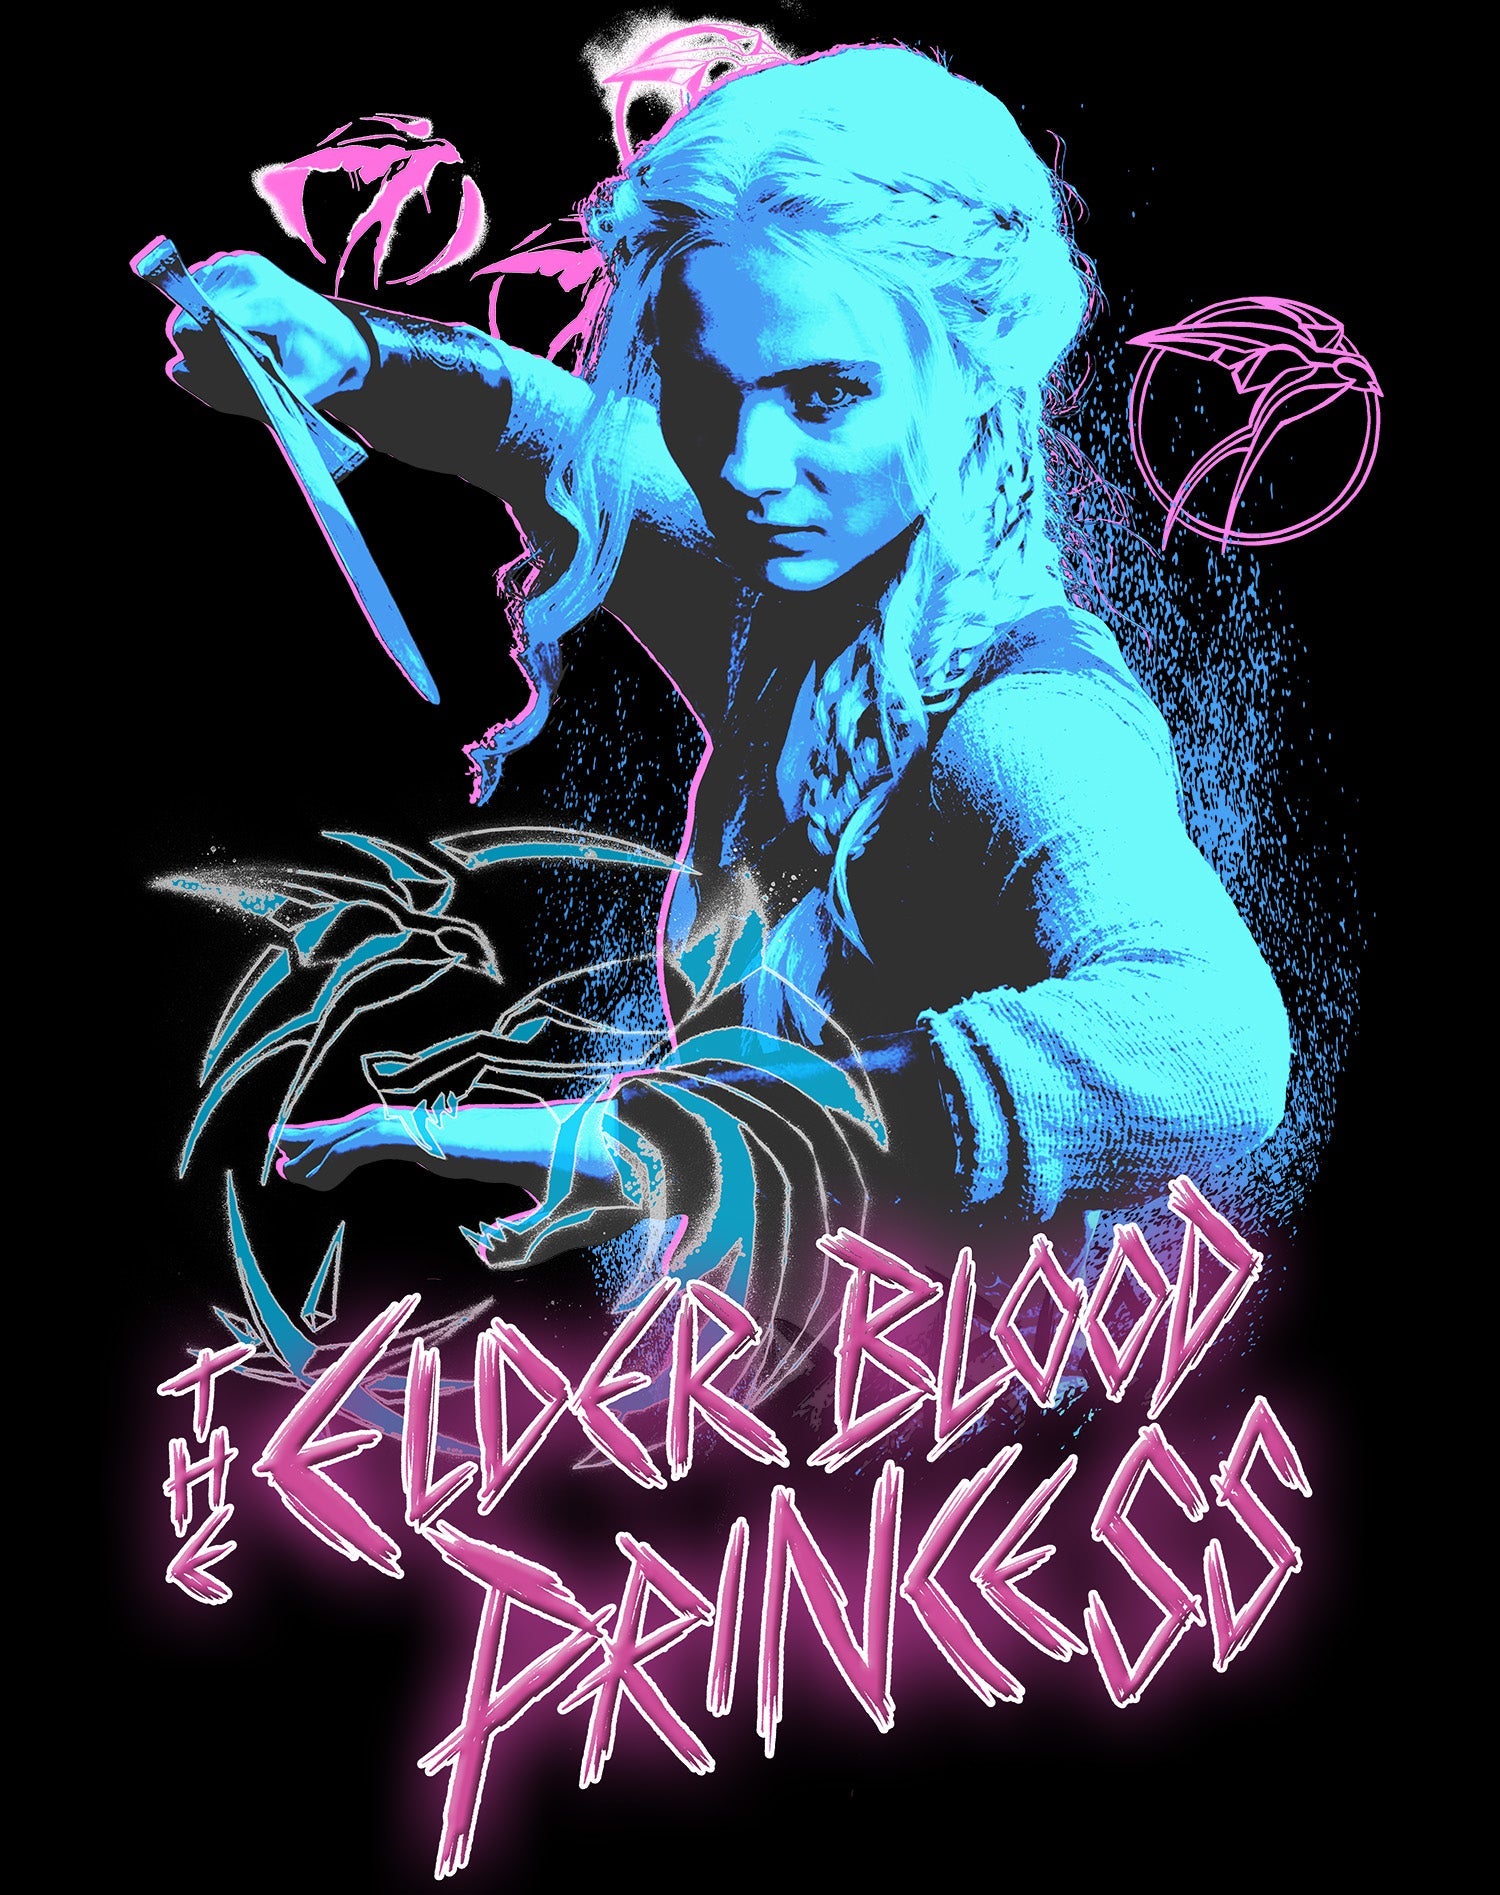 The Witcher Ciri Elder Blood Princess Official Sweatshirt